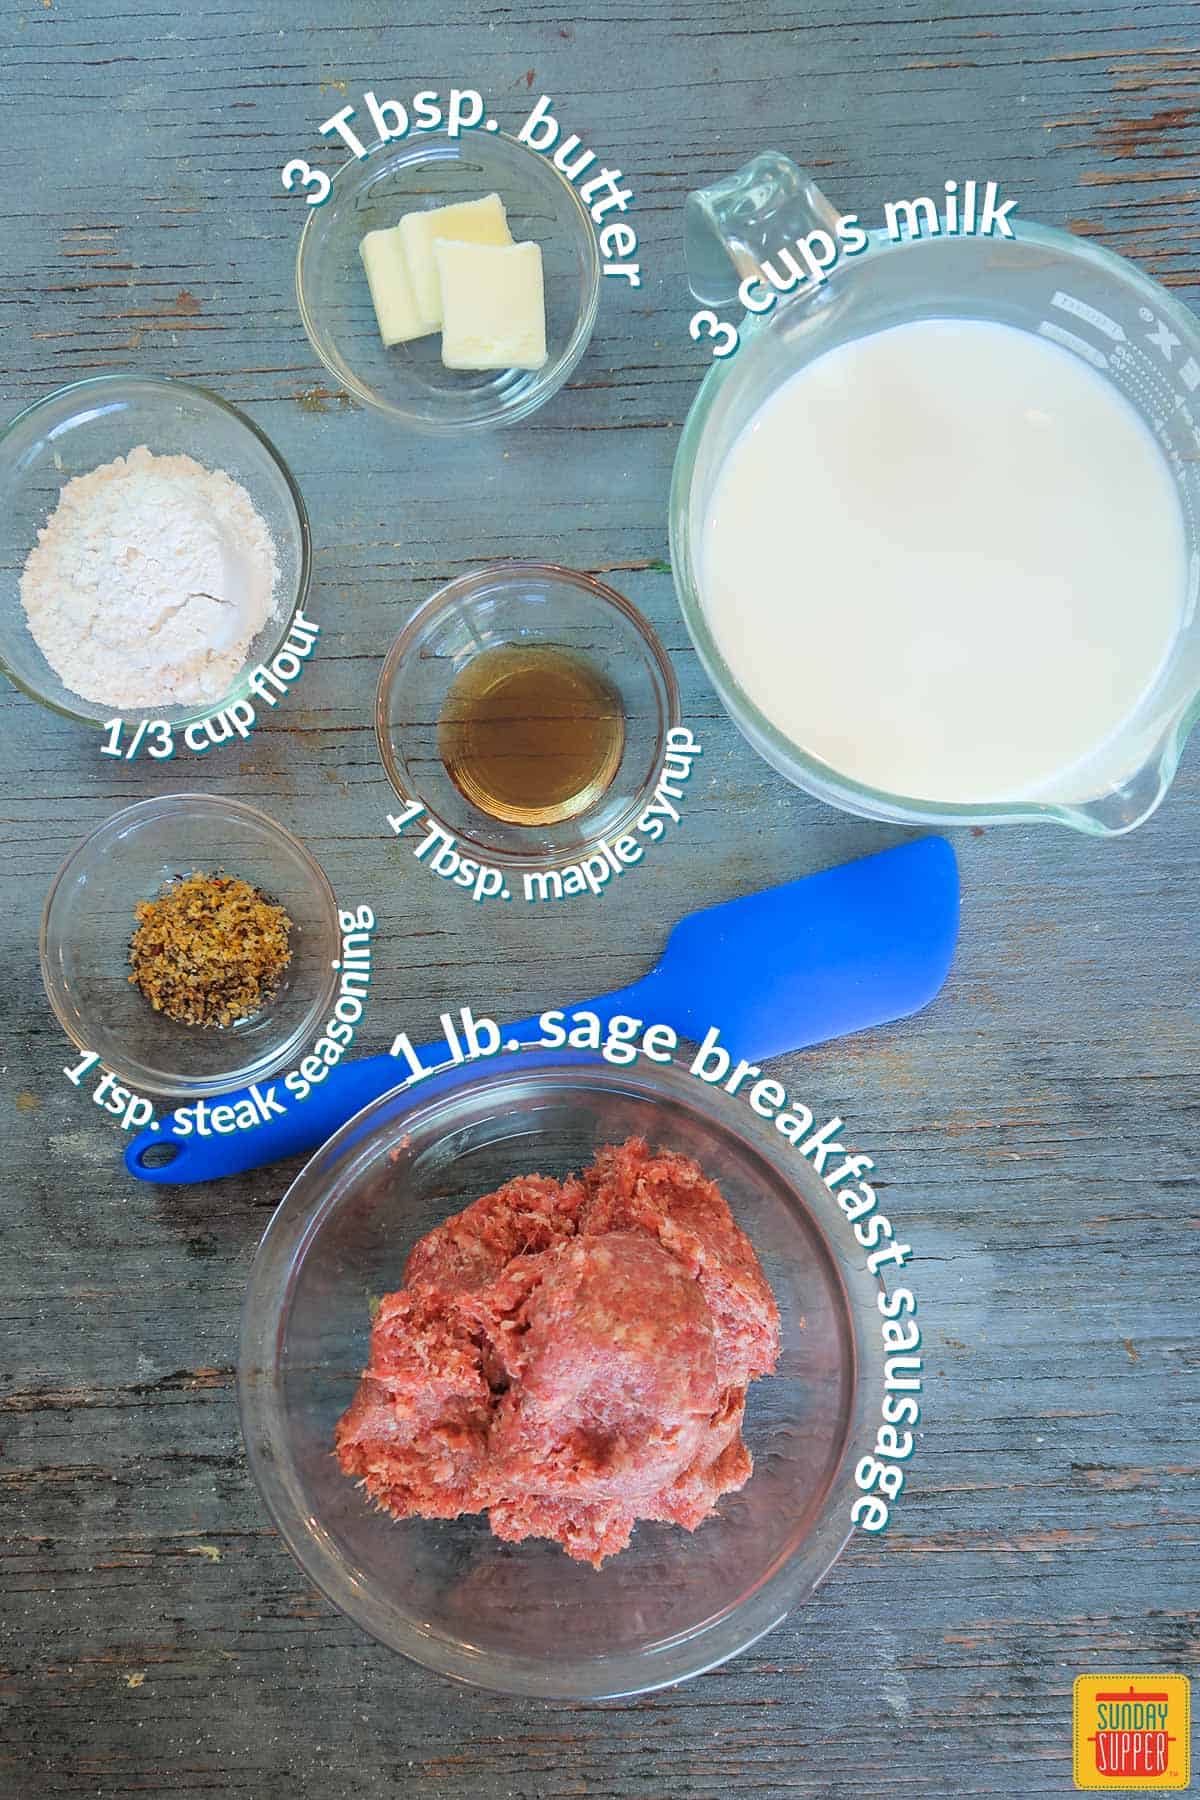 Ingredients for Sausage gravy biscuits